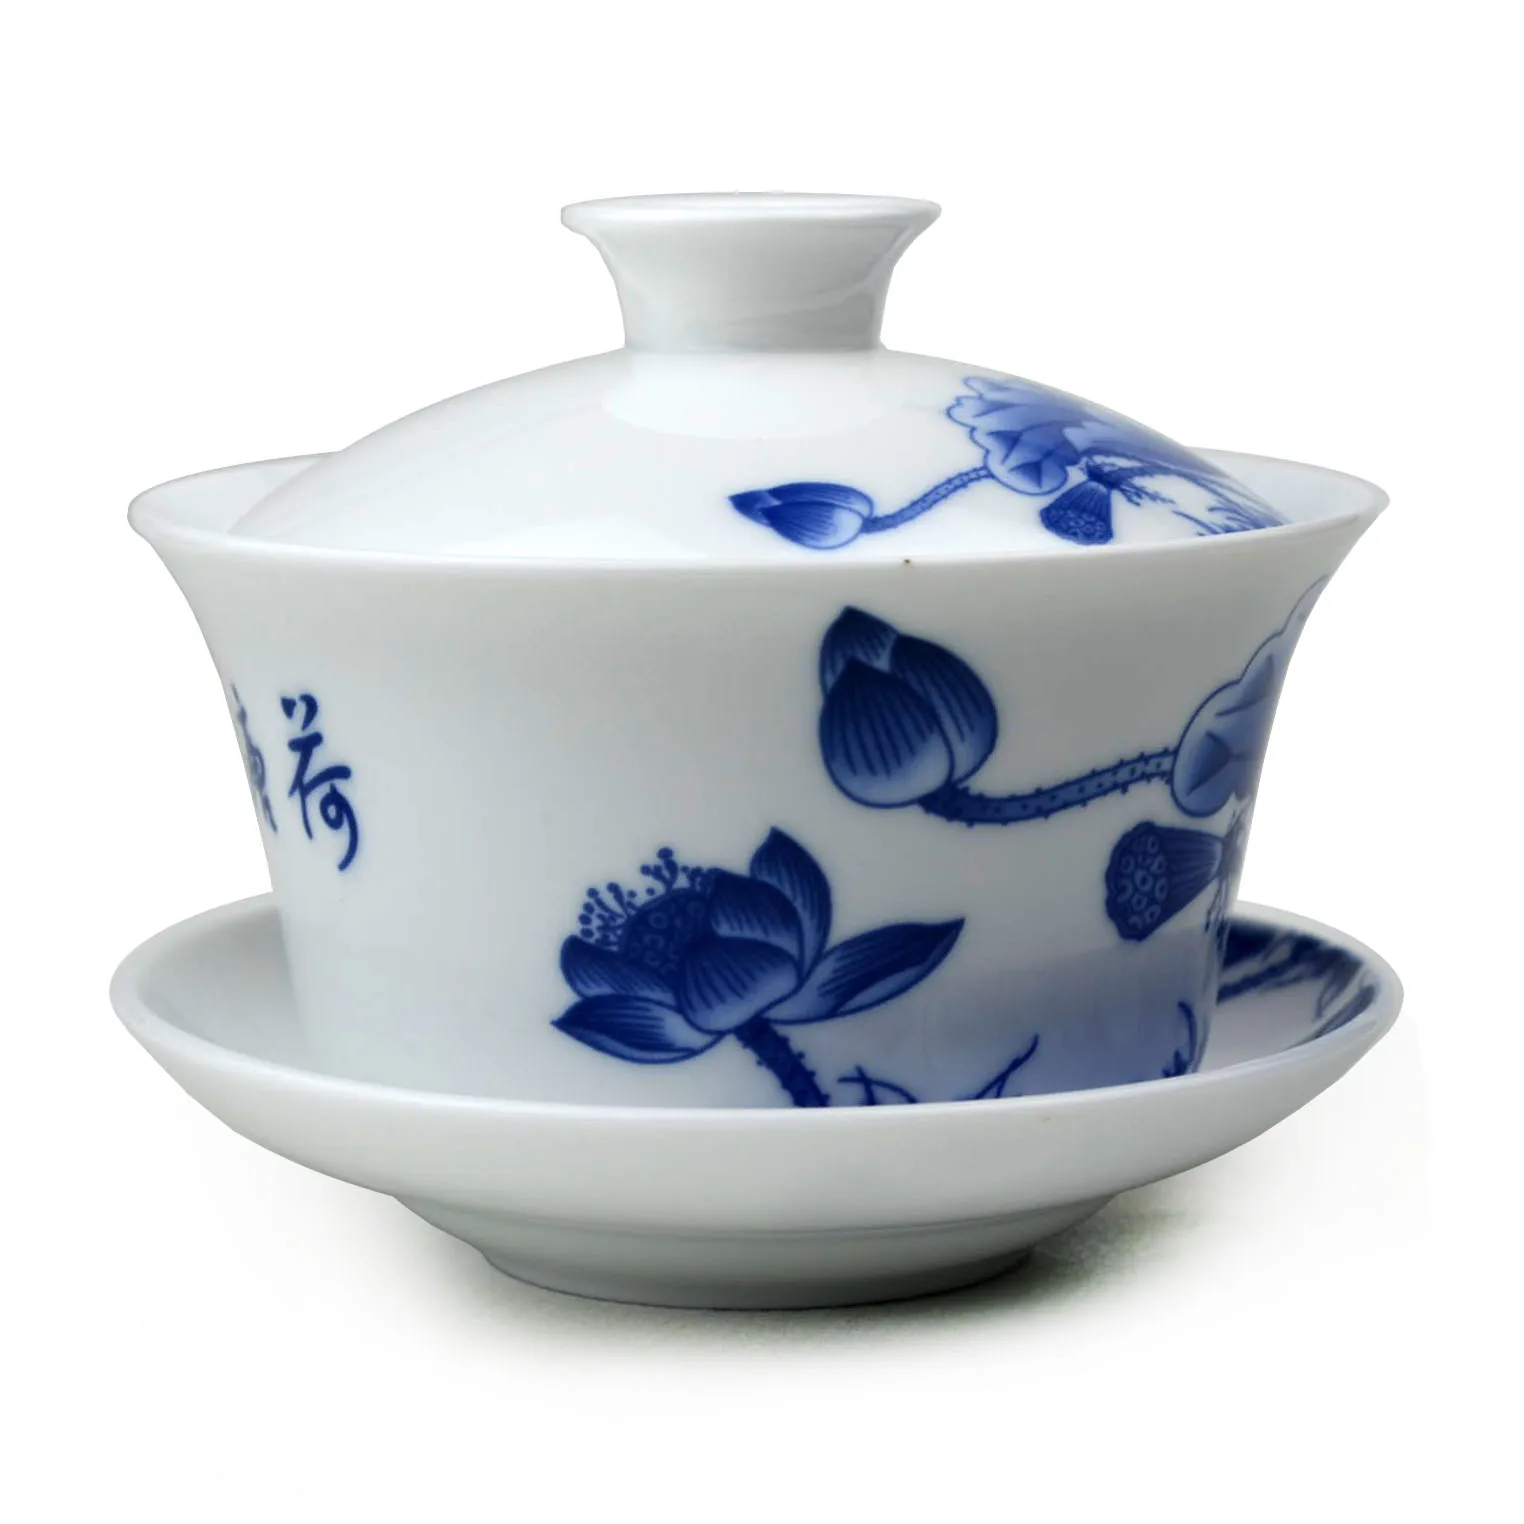 

Gaiwan 300ml tureen Lotus teacups Blue white porcelain traditional Chinese tea set lid cups saucer teaware cover bowl teaware